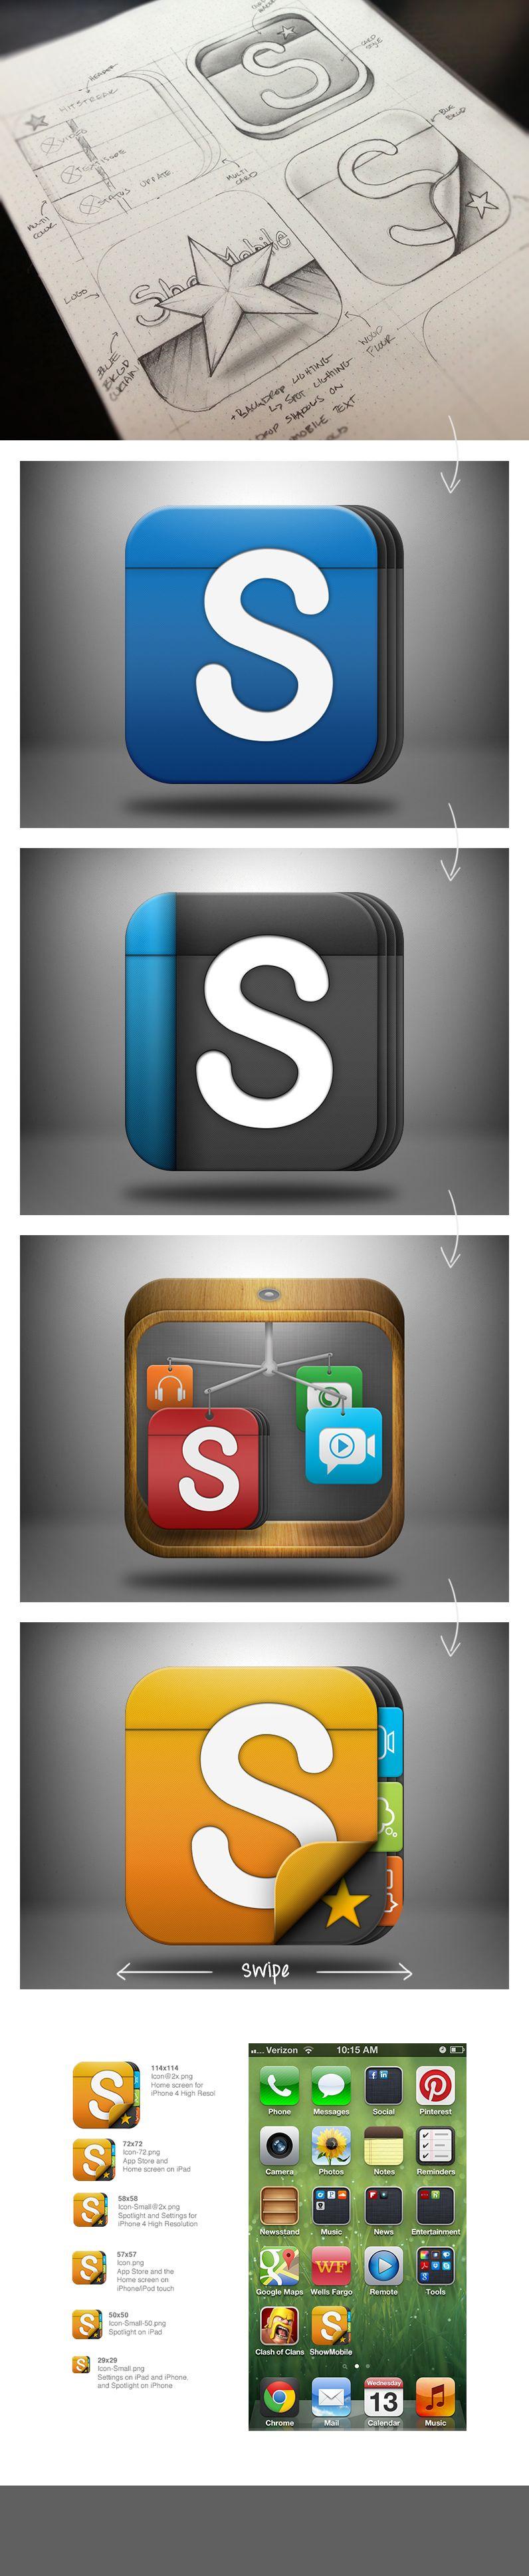 Google Slides App Logo - Web Design Inspiration. UI. UX. App icon